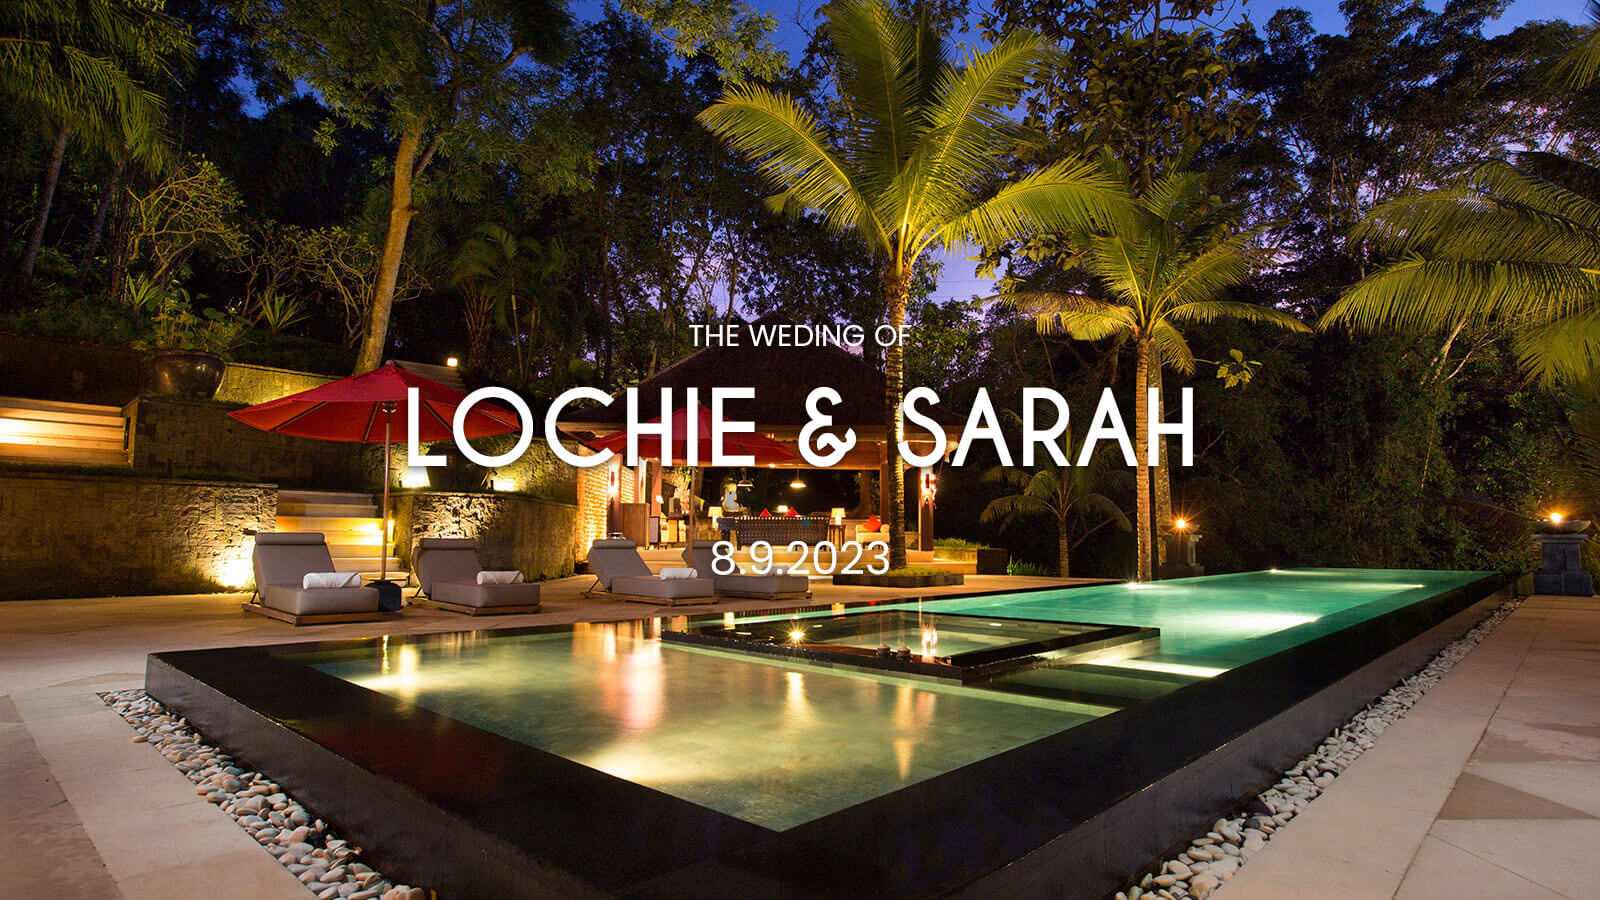 Lochie & Sarah